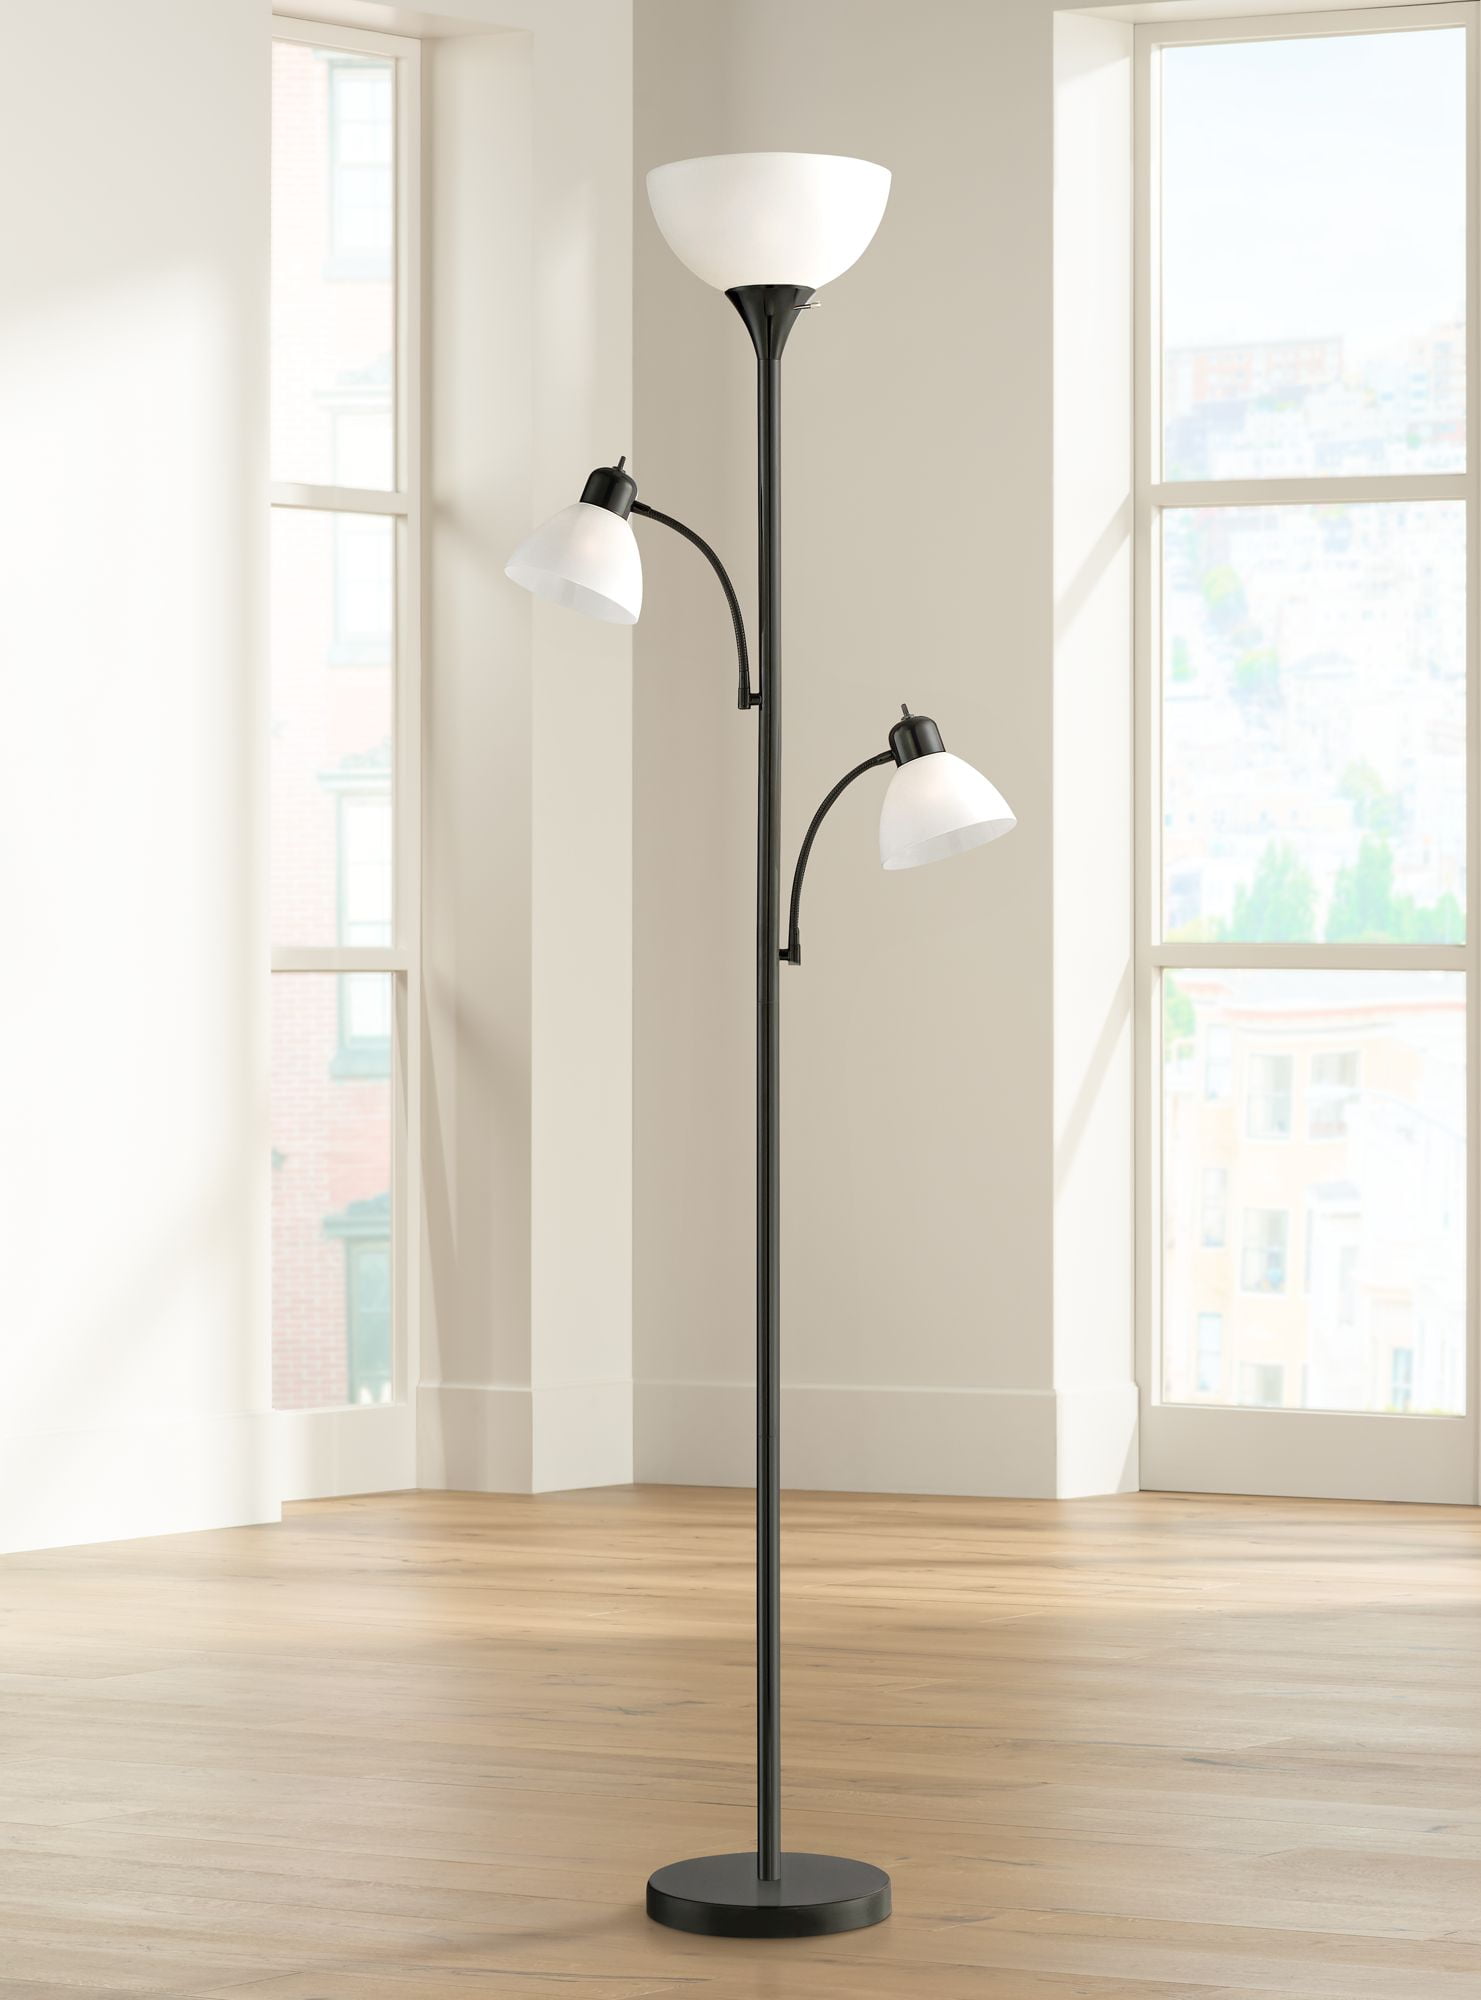 LED Crystal Floor Lighting Living Room Floor Lamp Bedroom Standard Light Fixture